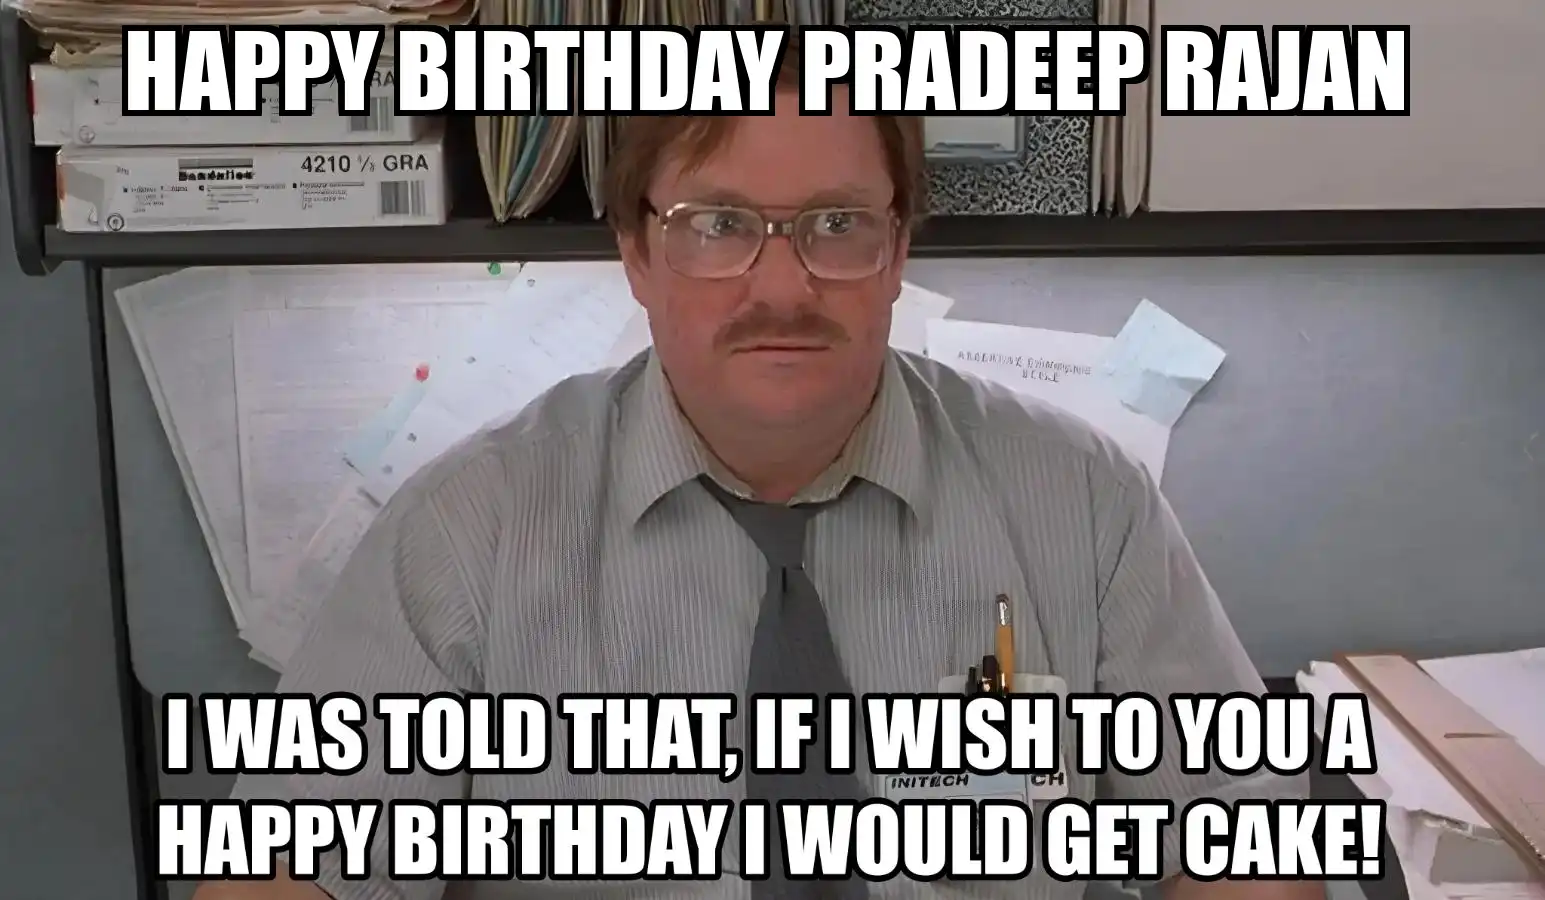 Happy Birthday Pradeep rajan I Would Get A Cake Meme